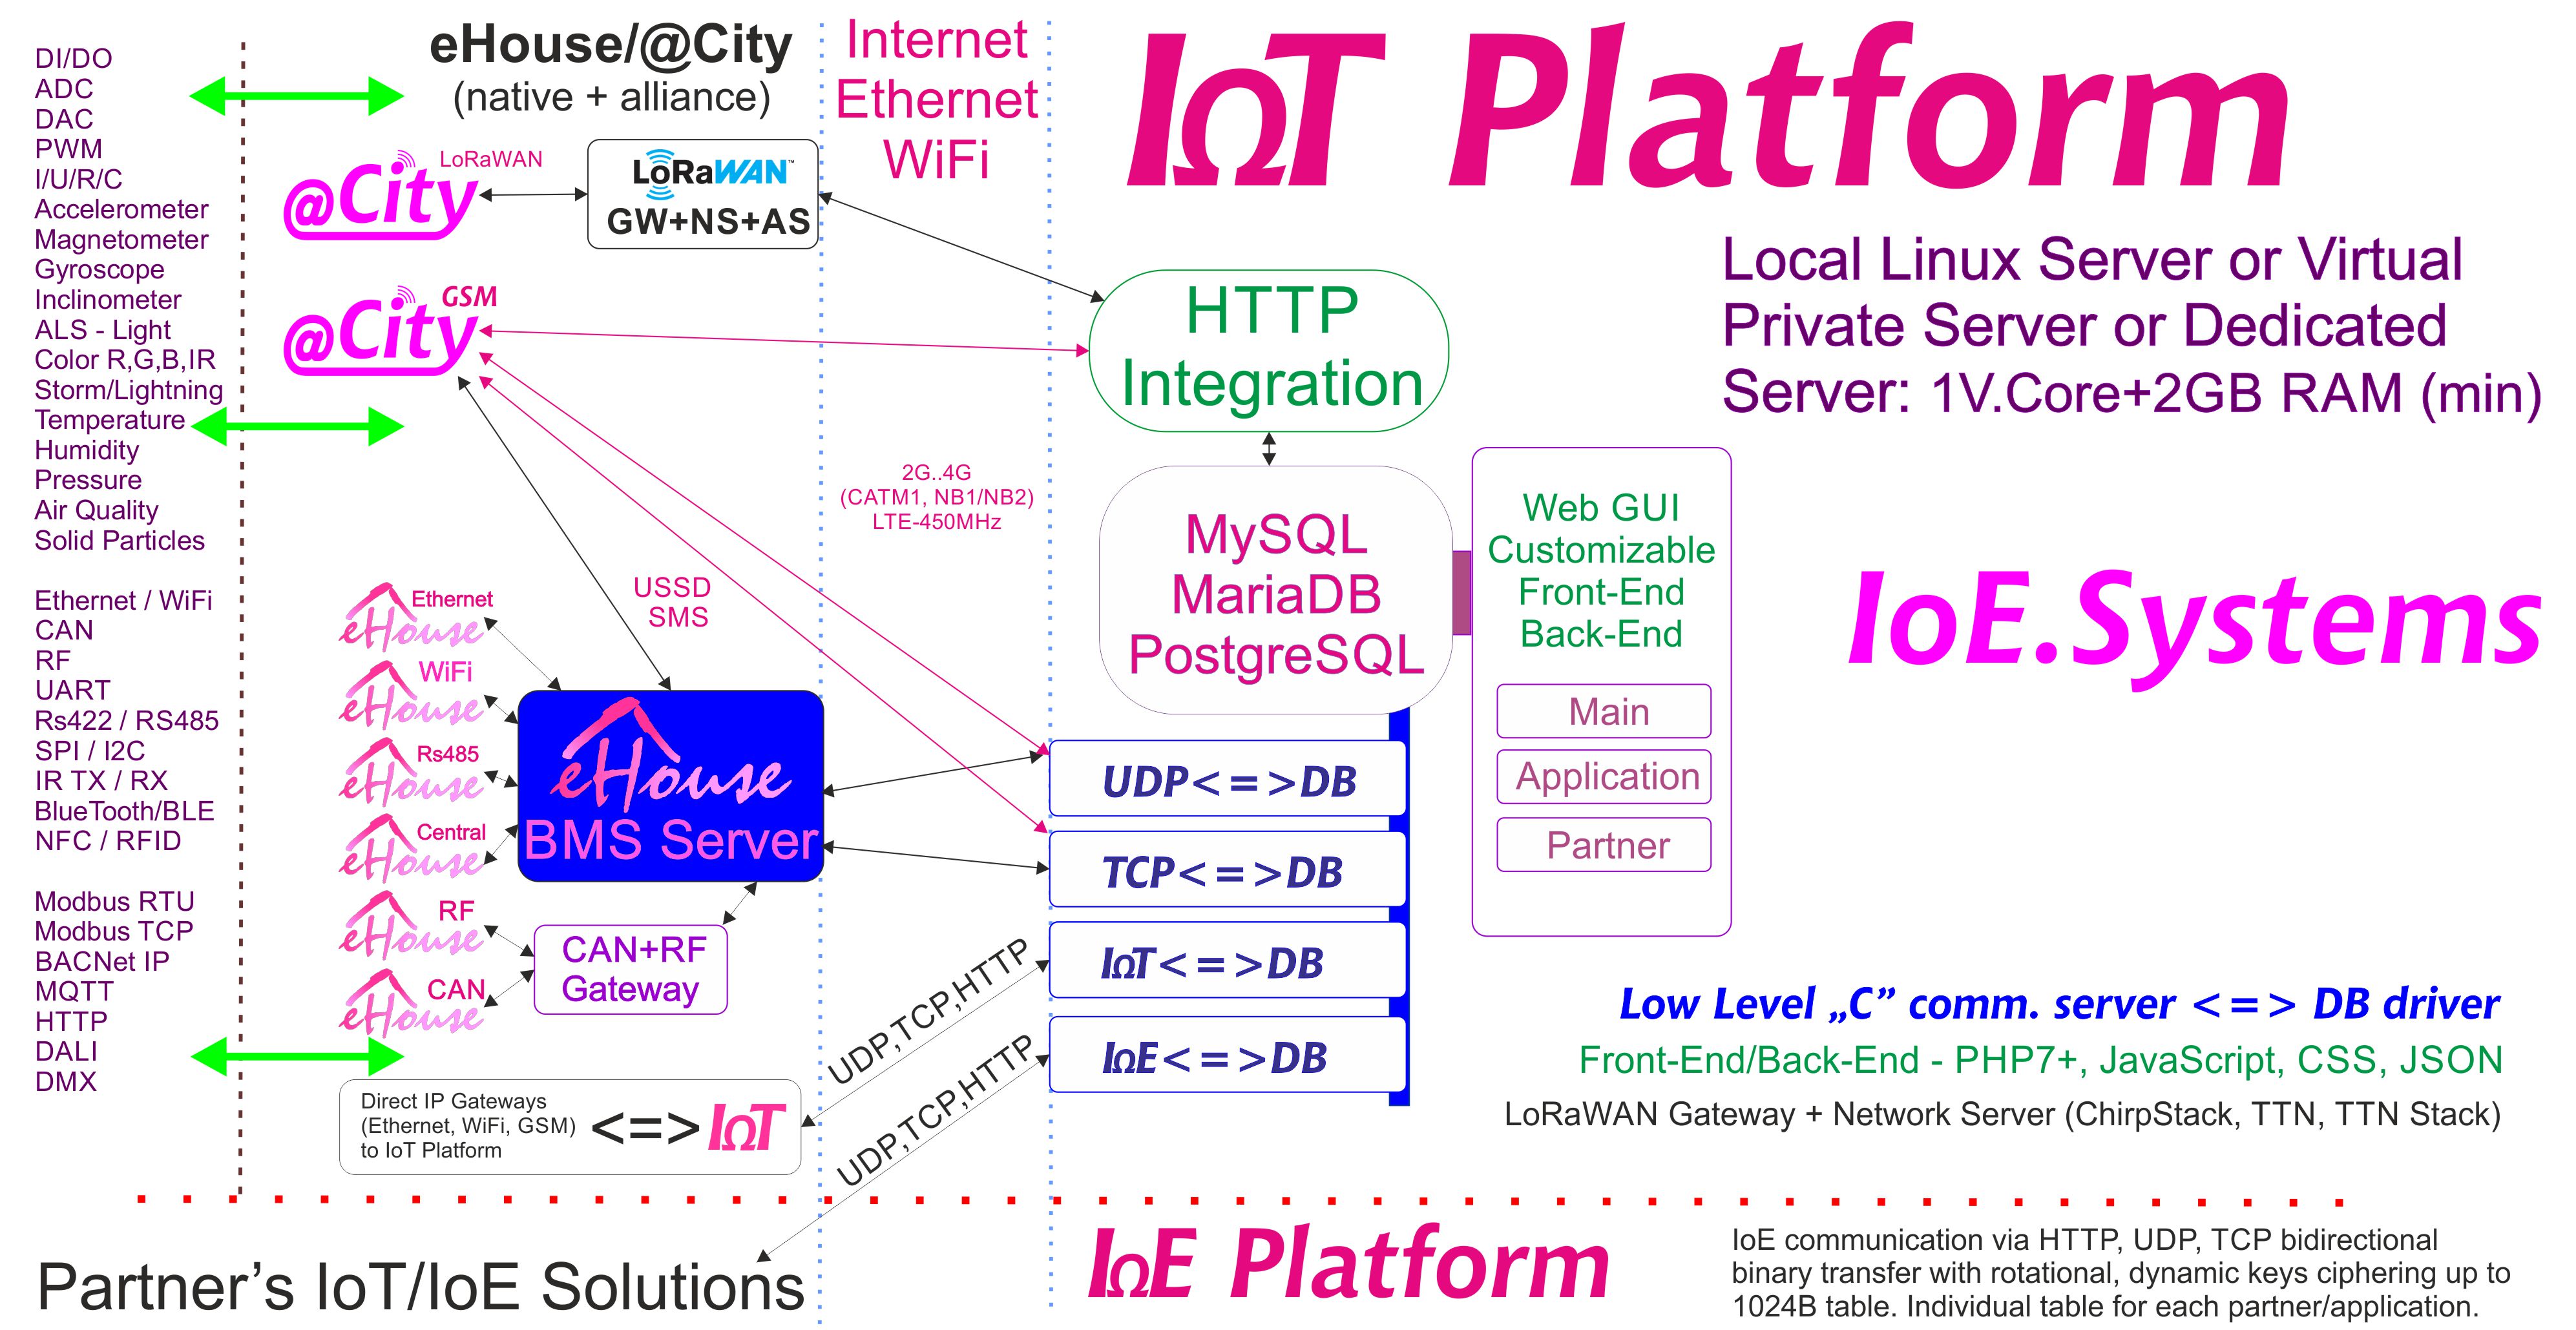 eHouse, eCity Server Software BAS, BMS, IoE, IoT Systems ma Platform